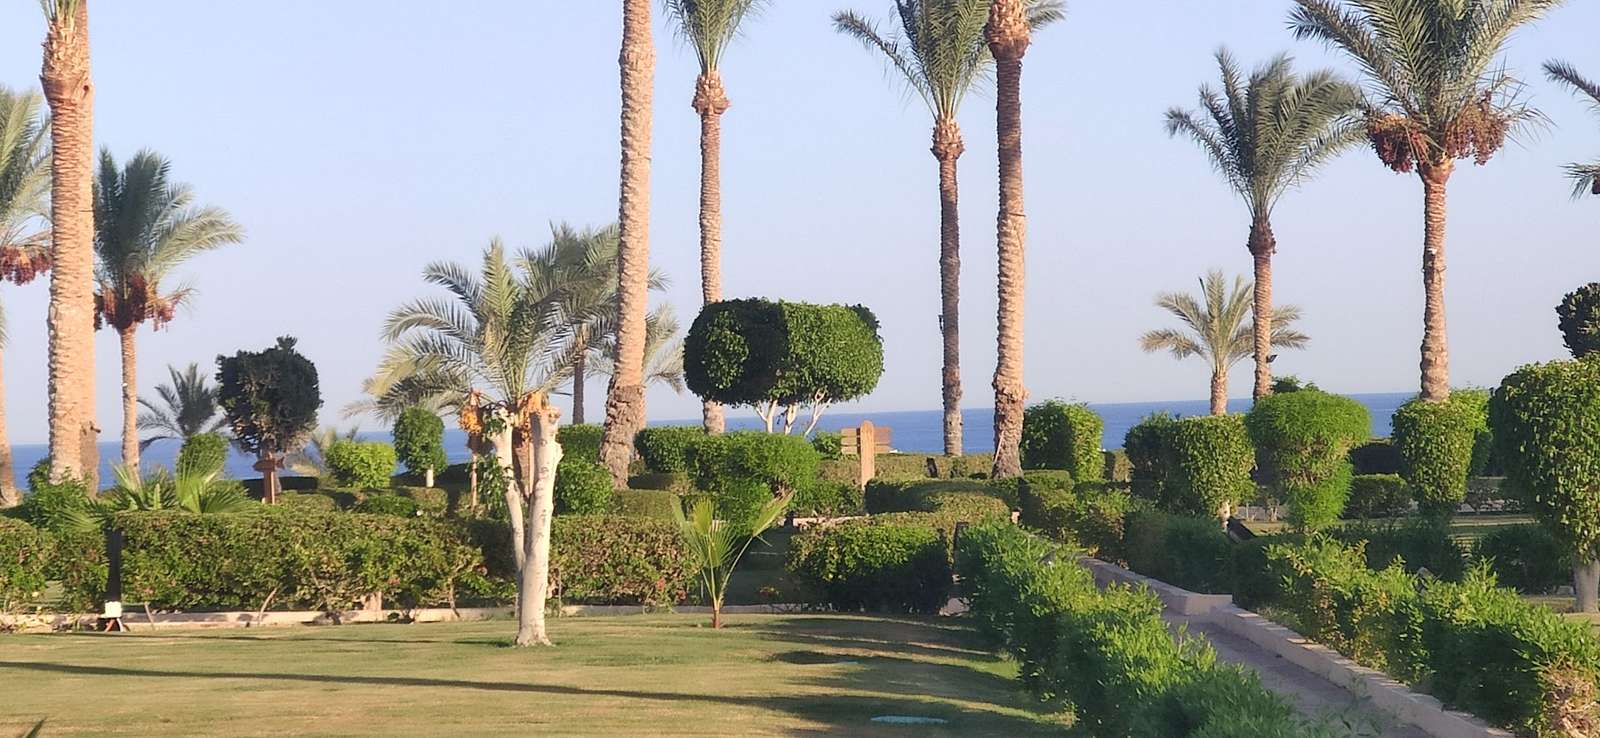 Grand Oasis Resort Sharm el Sheikh puzzle online